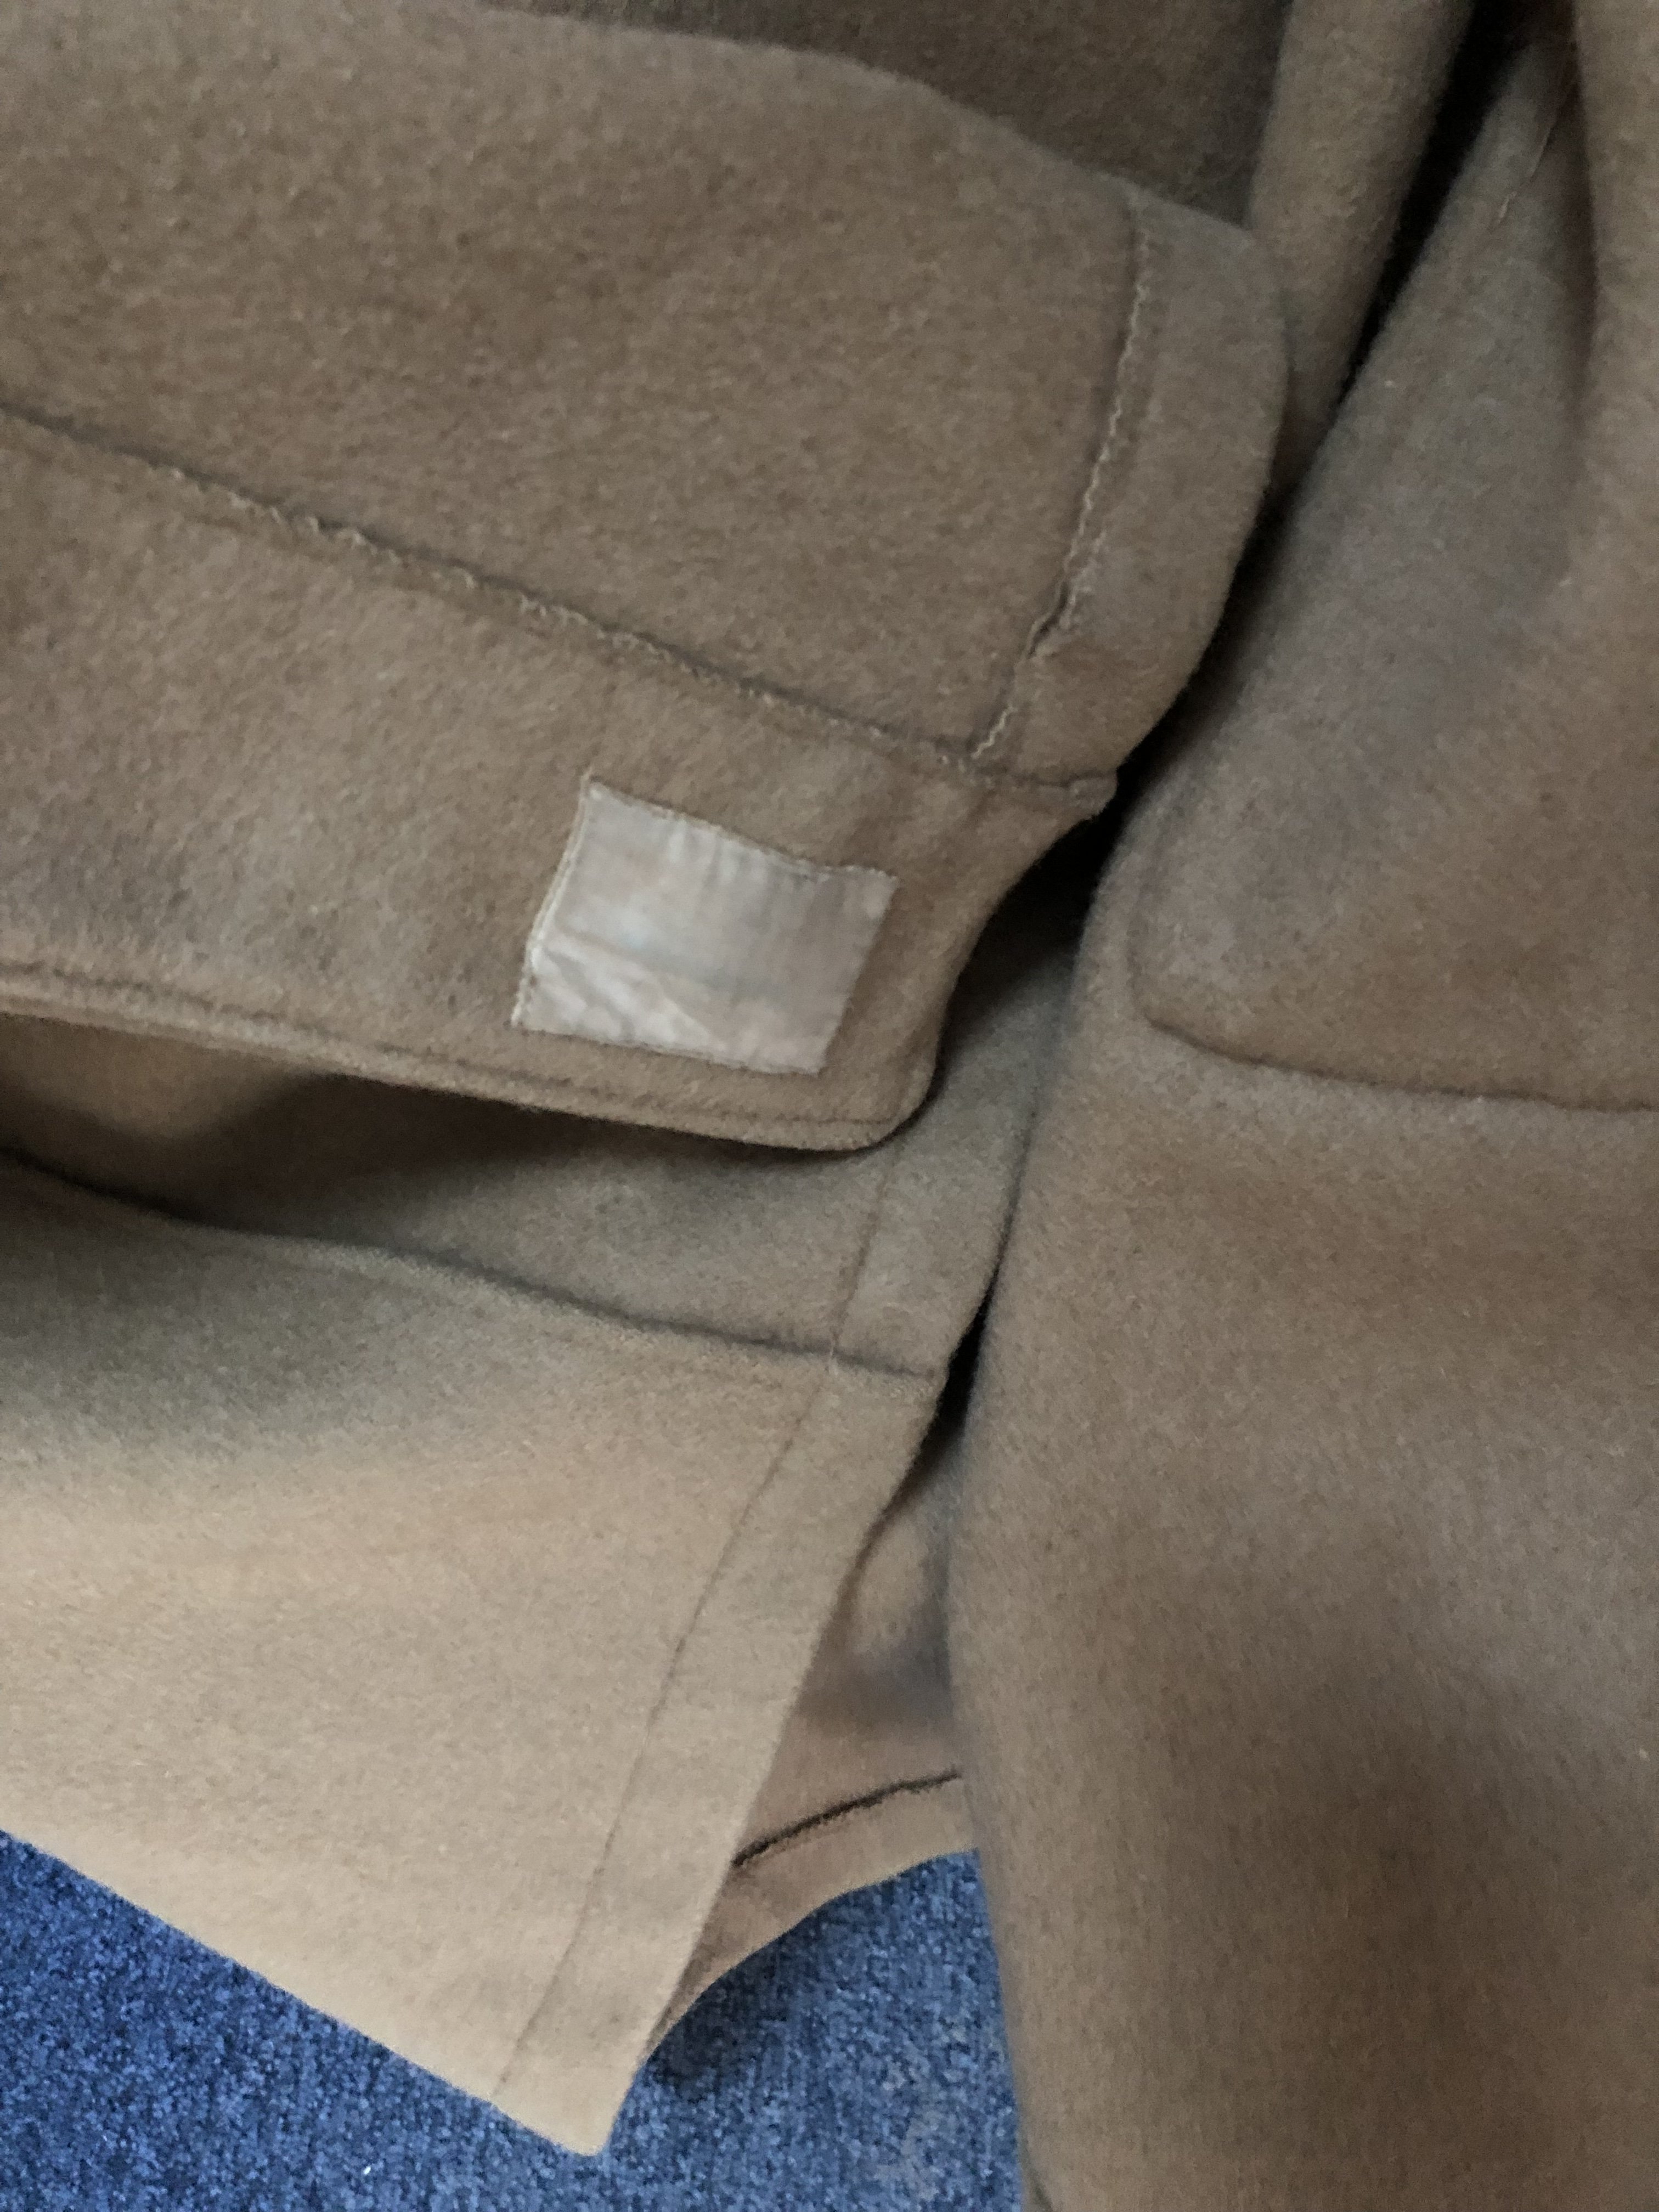 Duffle / Duffel coat find. SAS or RN | Vintage Leather Jackets Forum